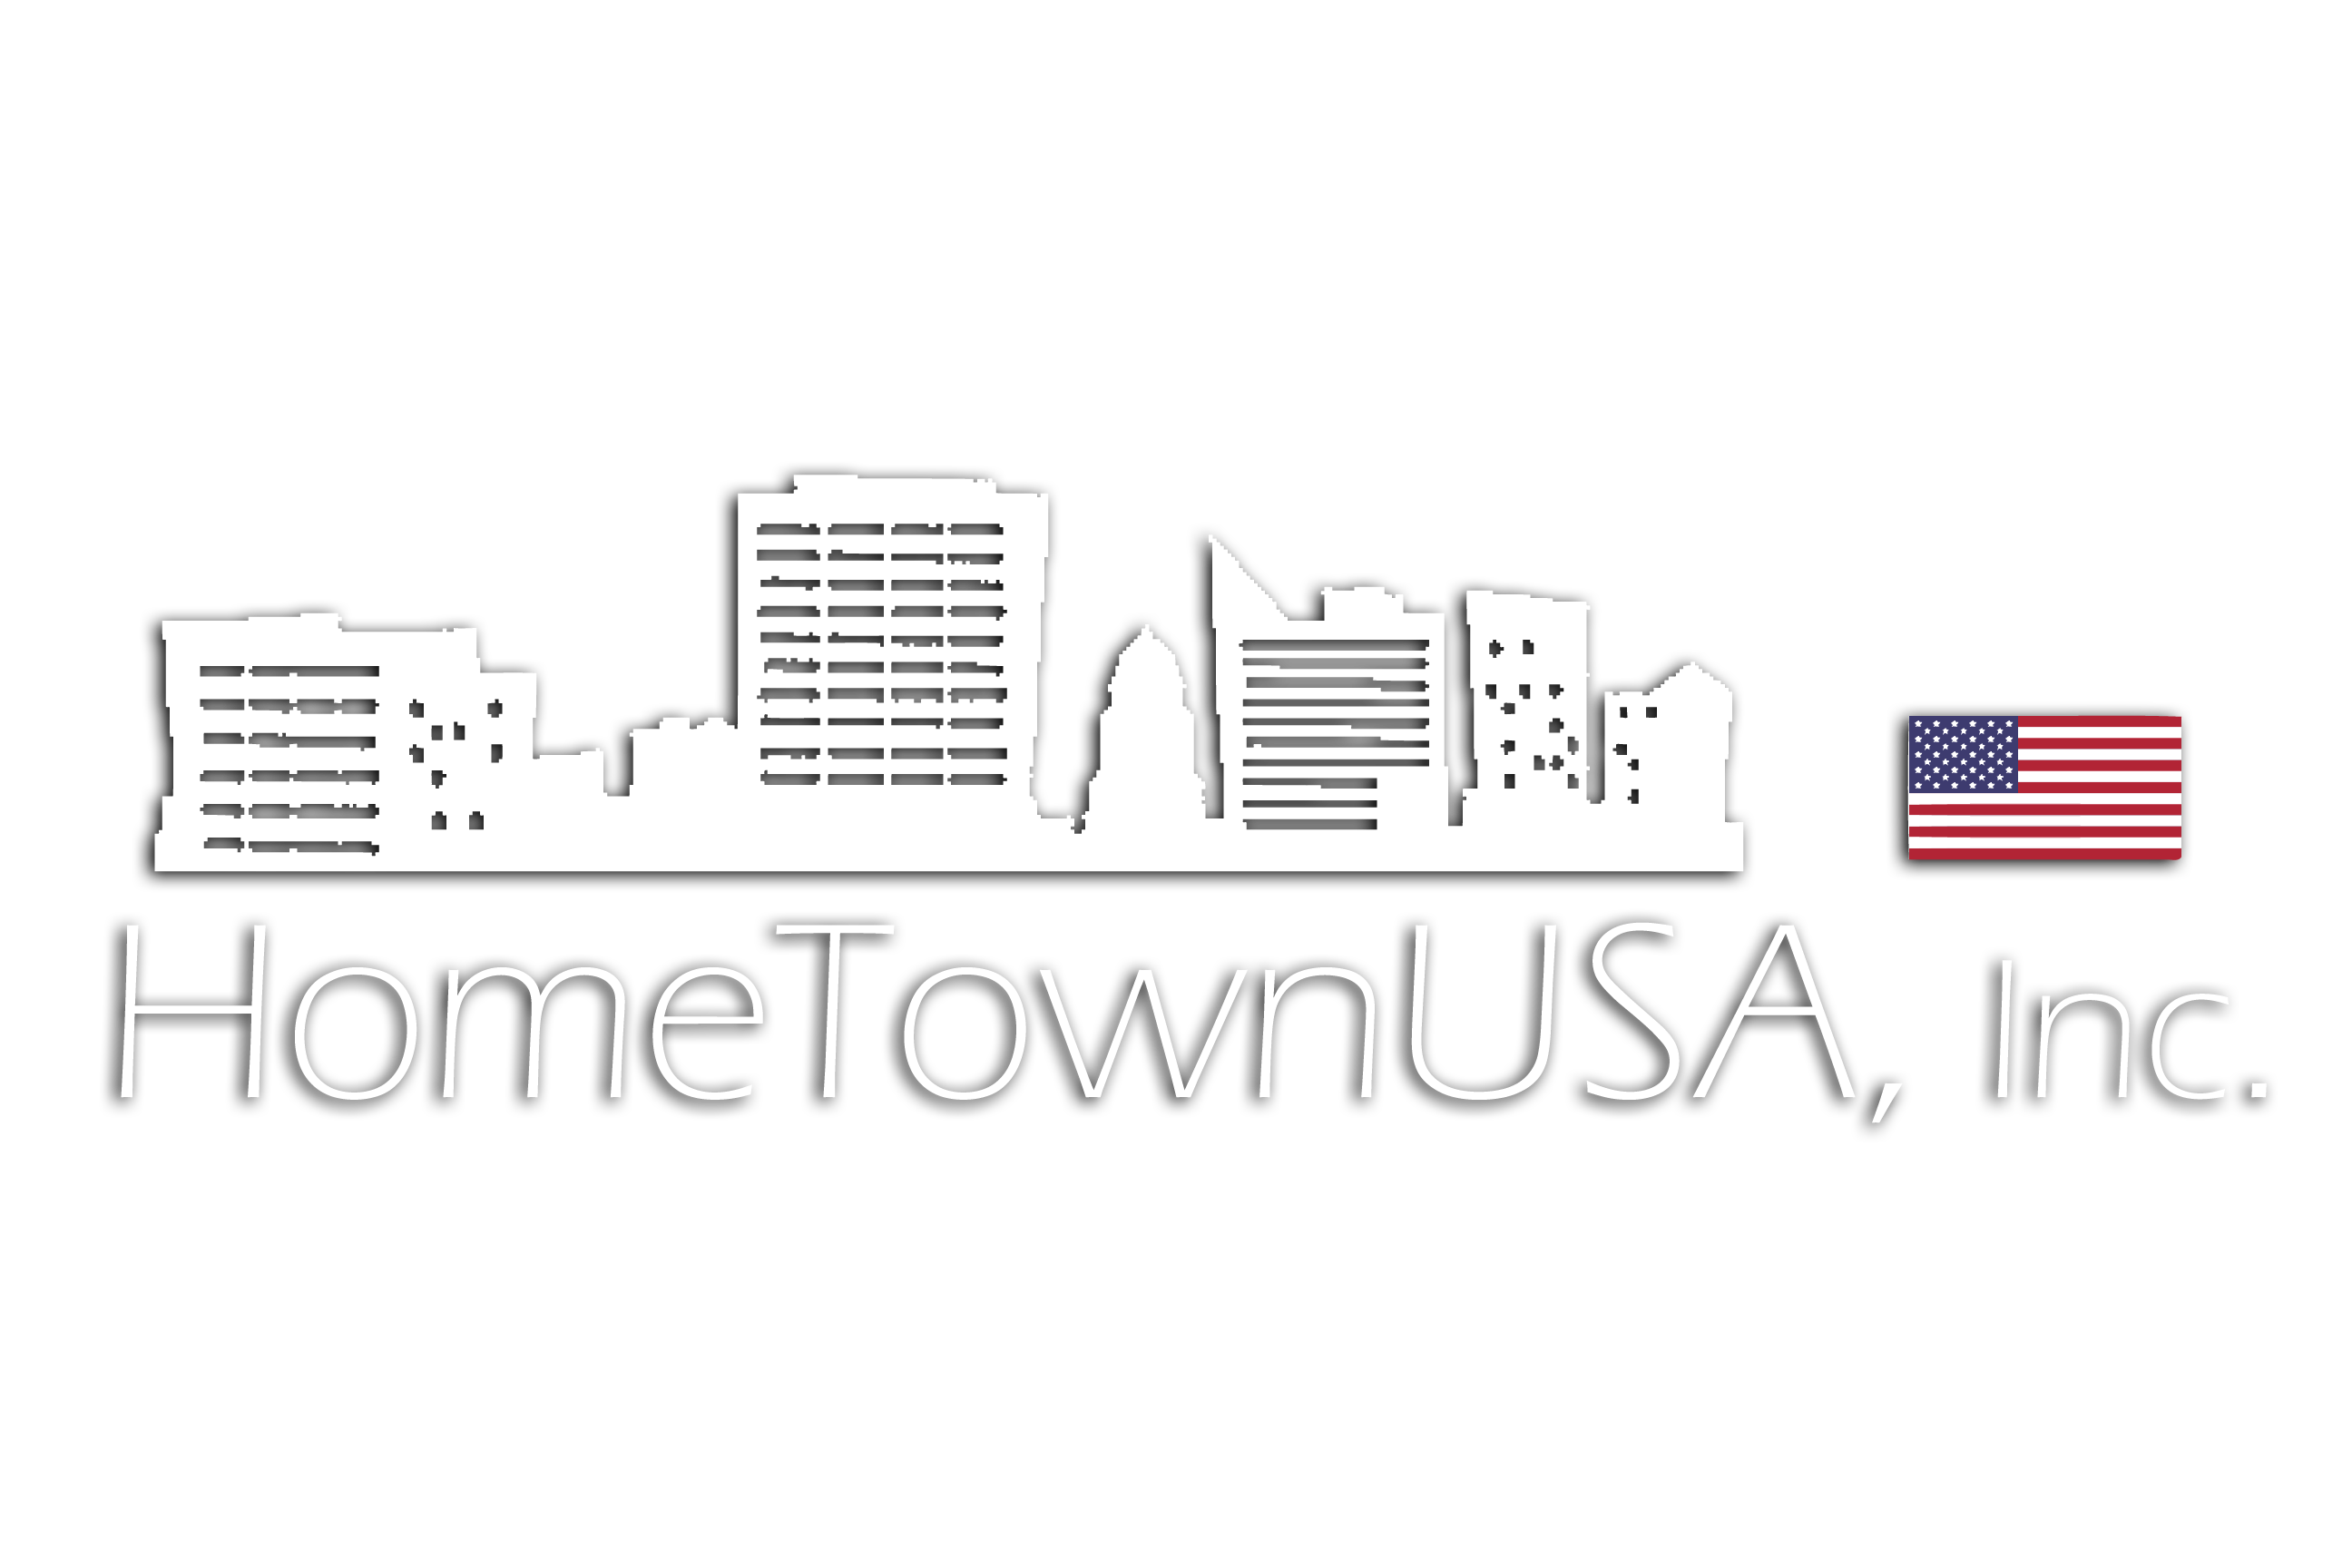 Hometown USA logo